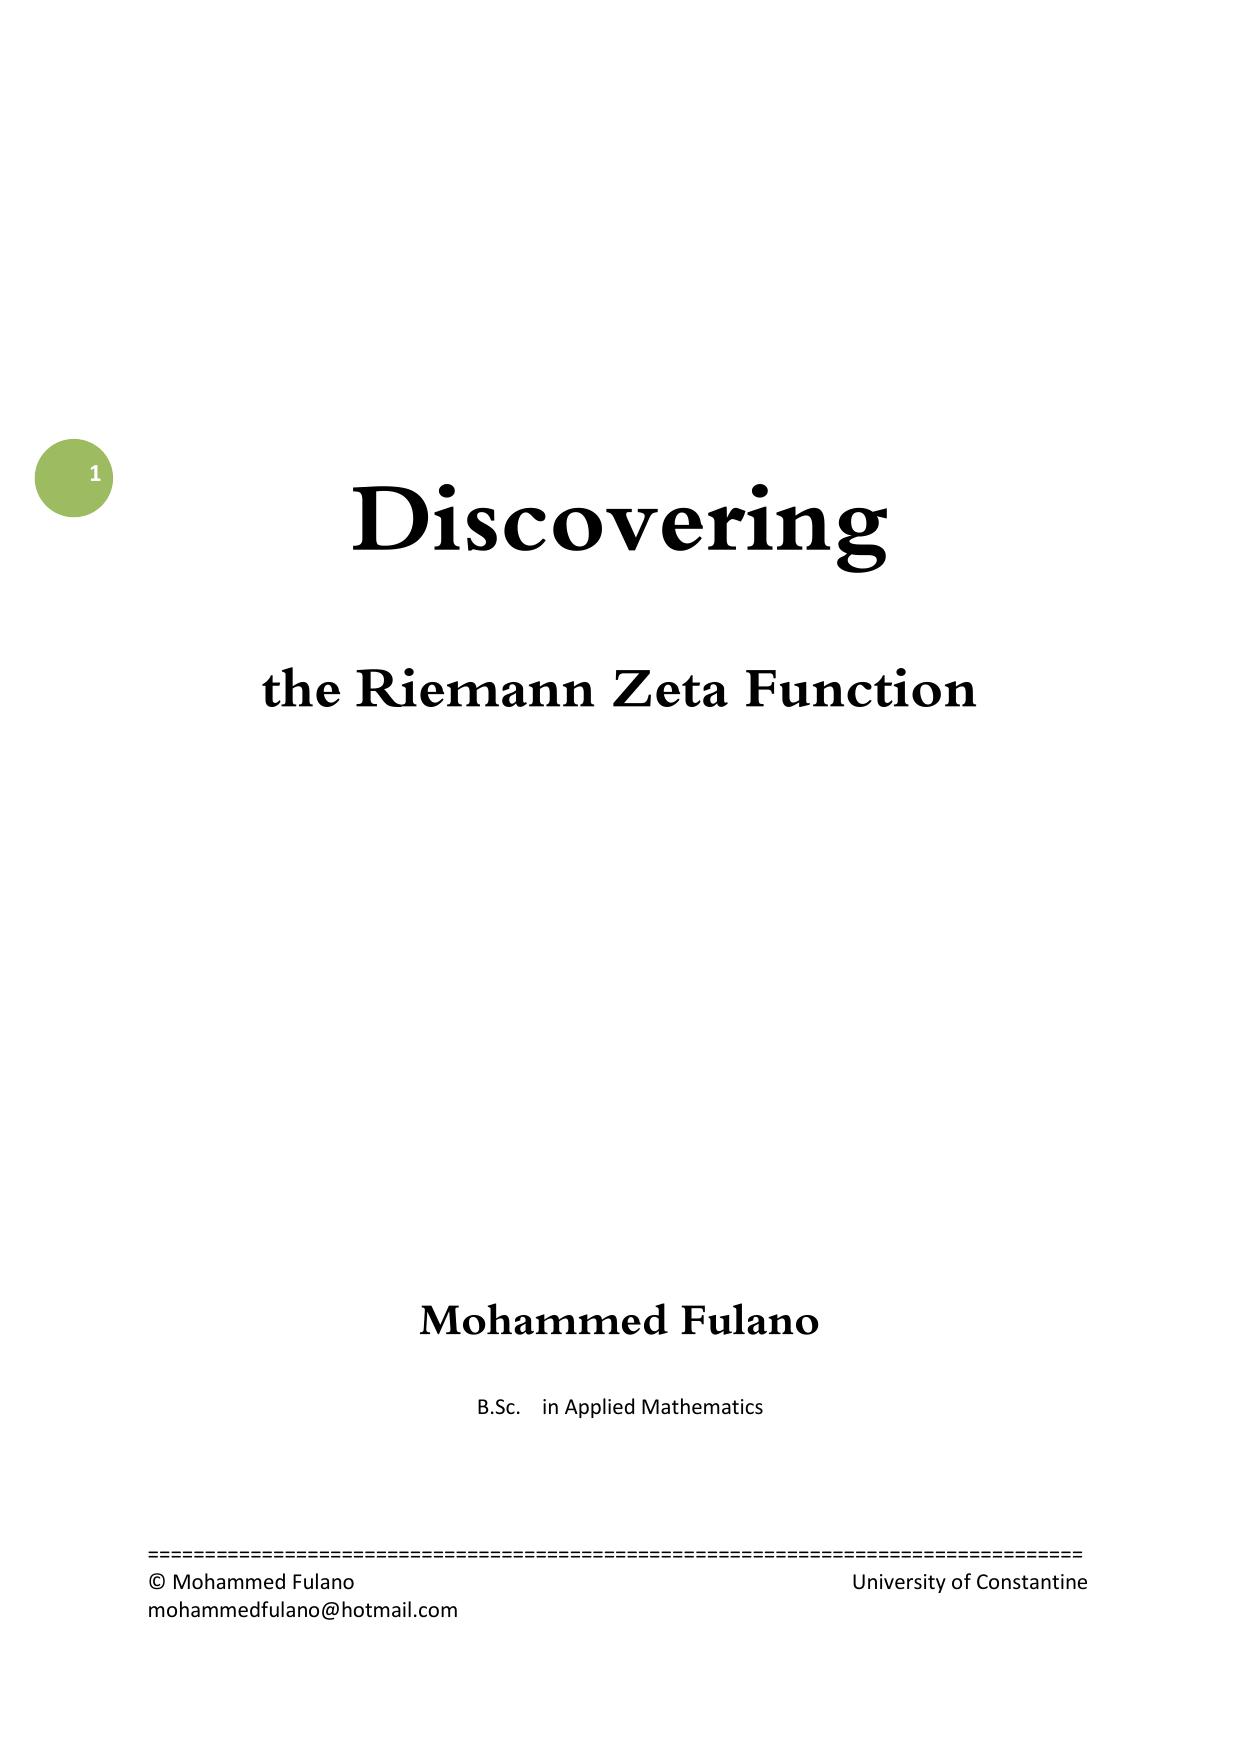 Discovering the Riemann Zeta Function